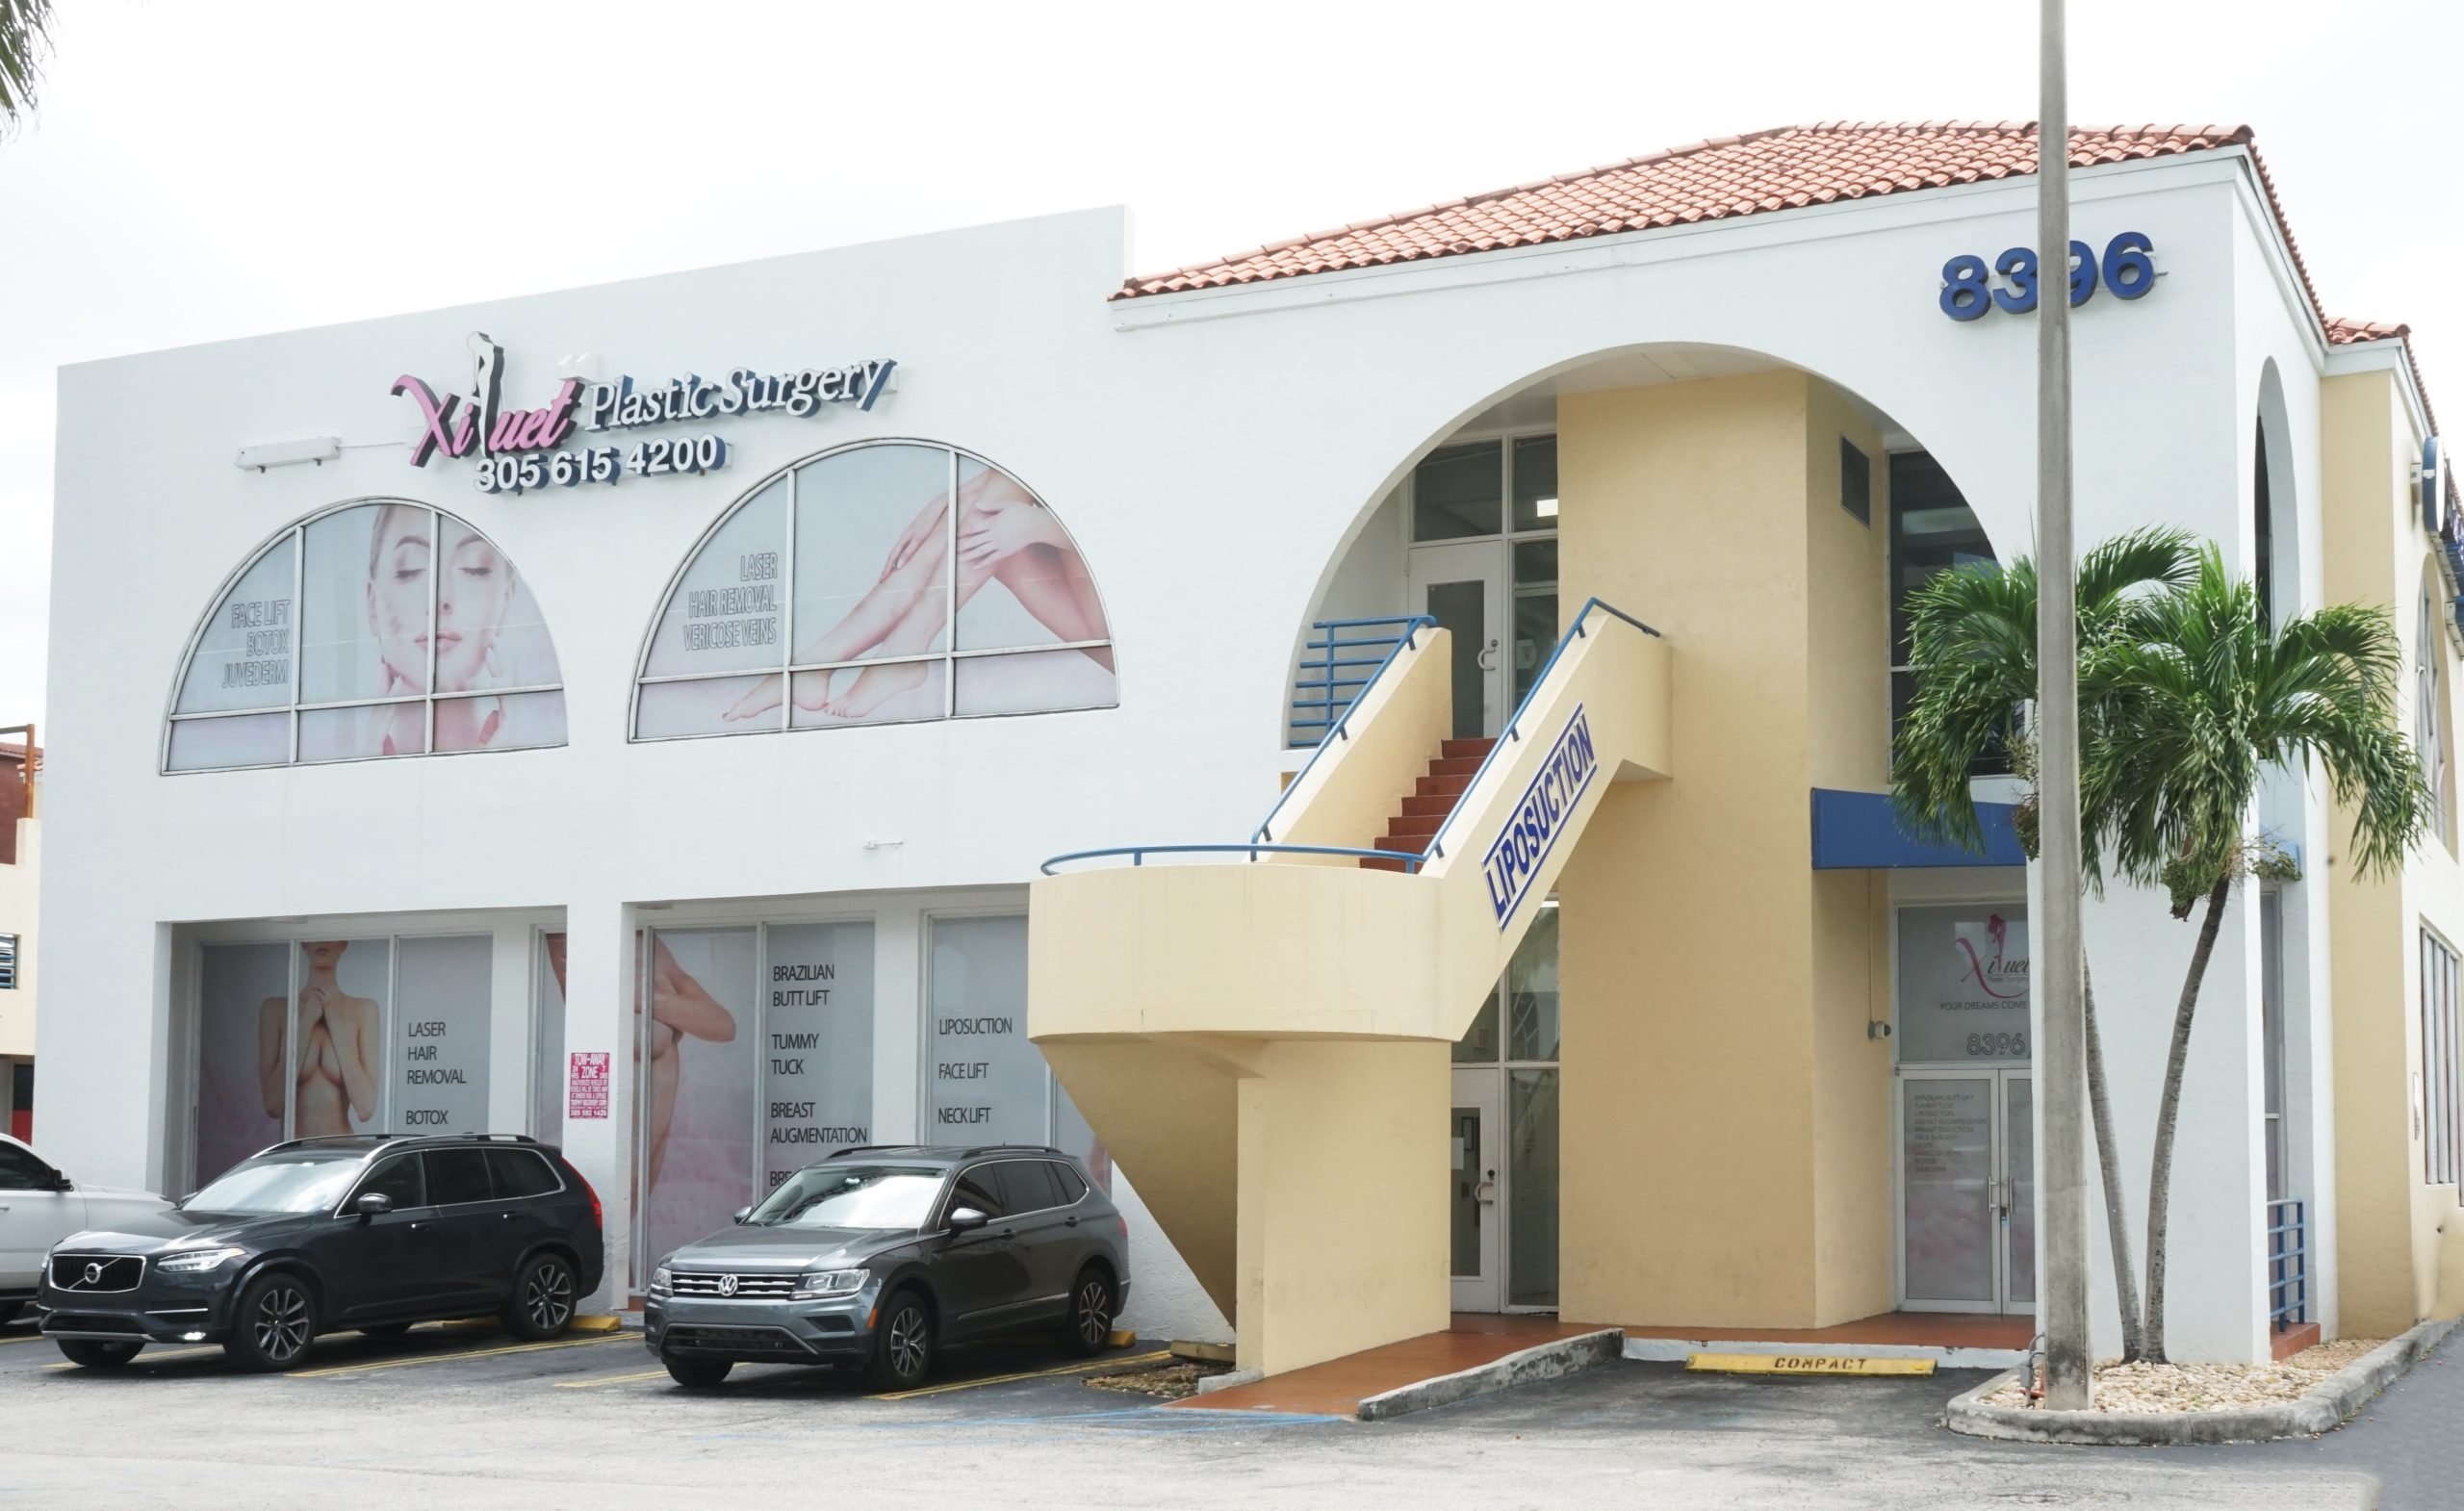 Xiluet Miami Plastic Surgery Center